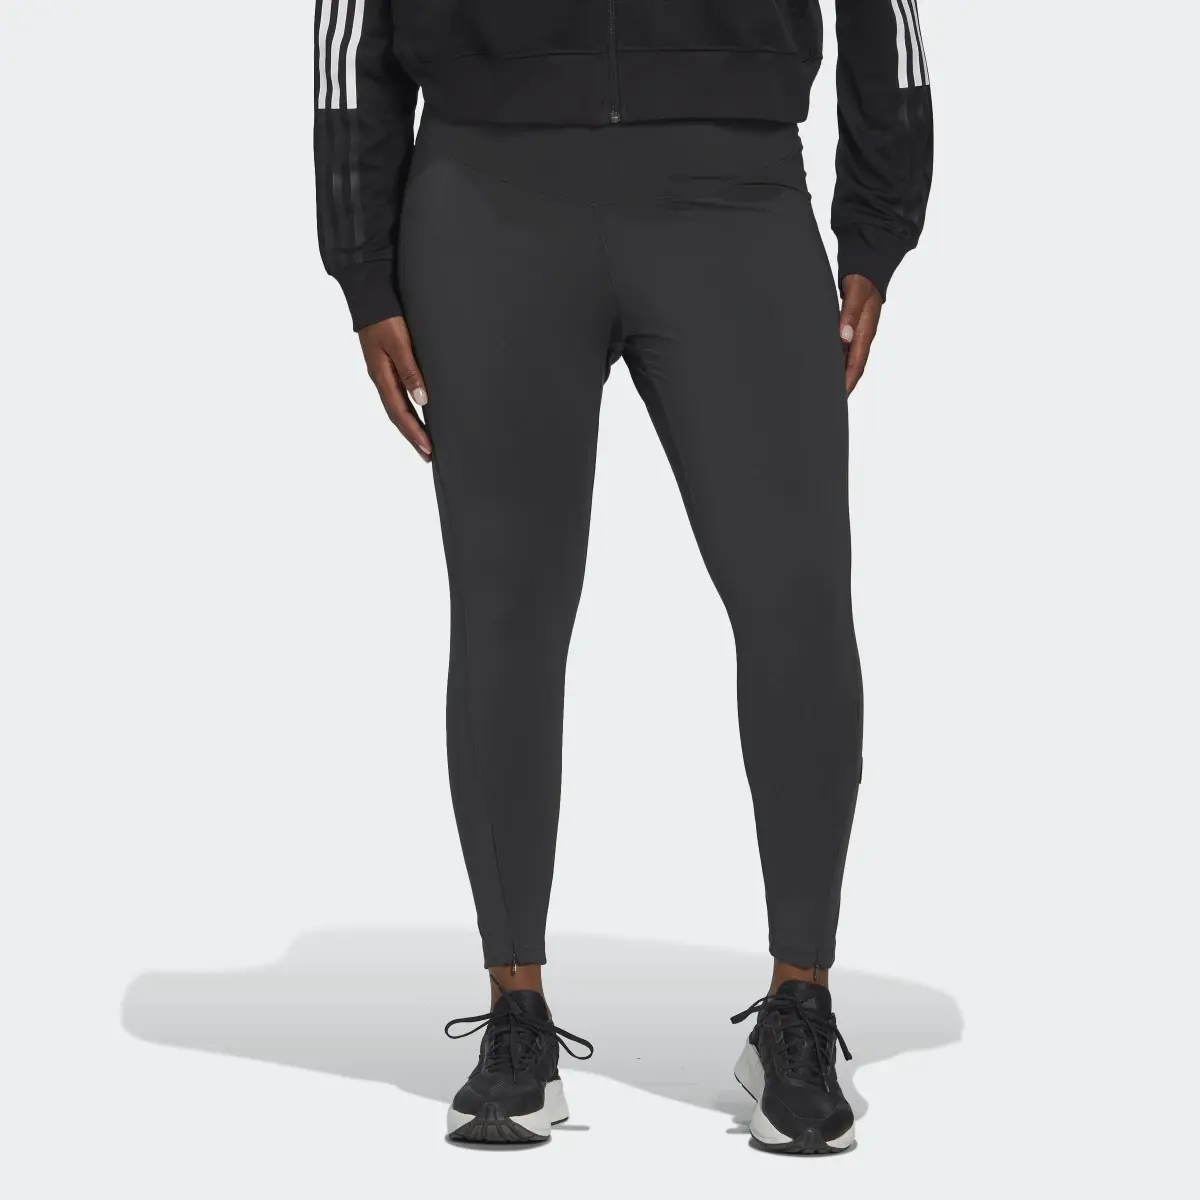 Adidas Tight – Große Größen. 1